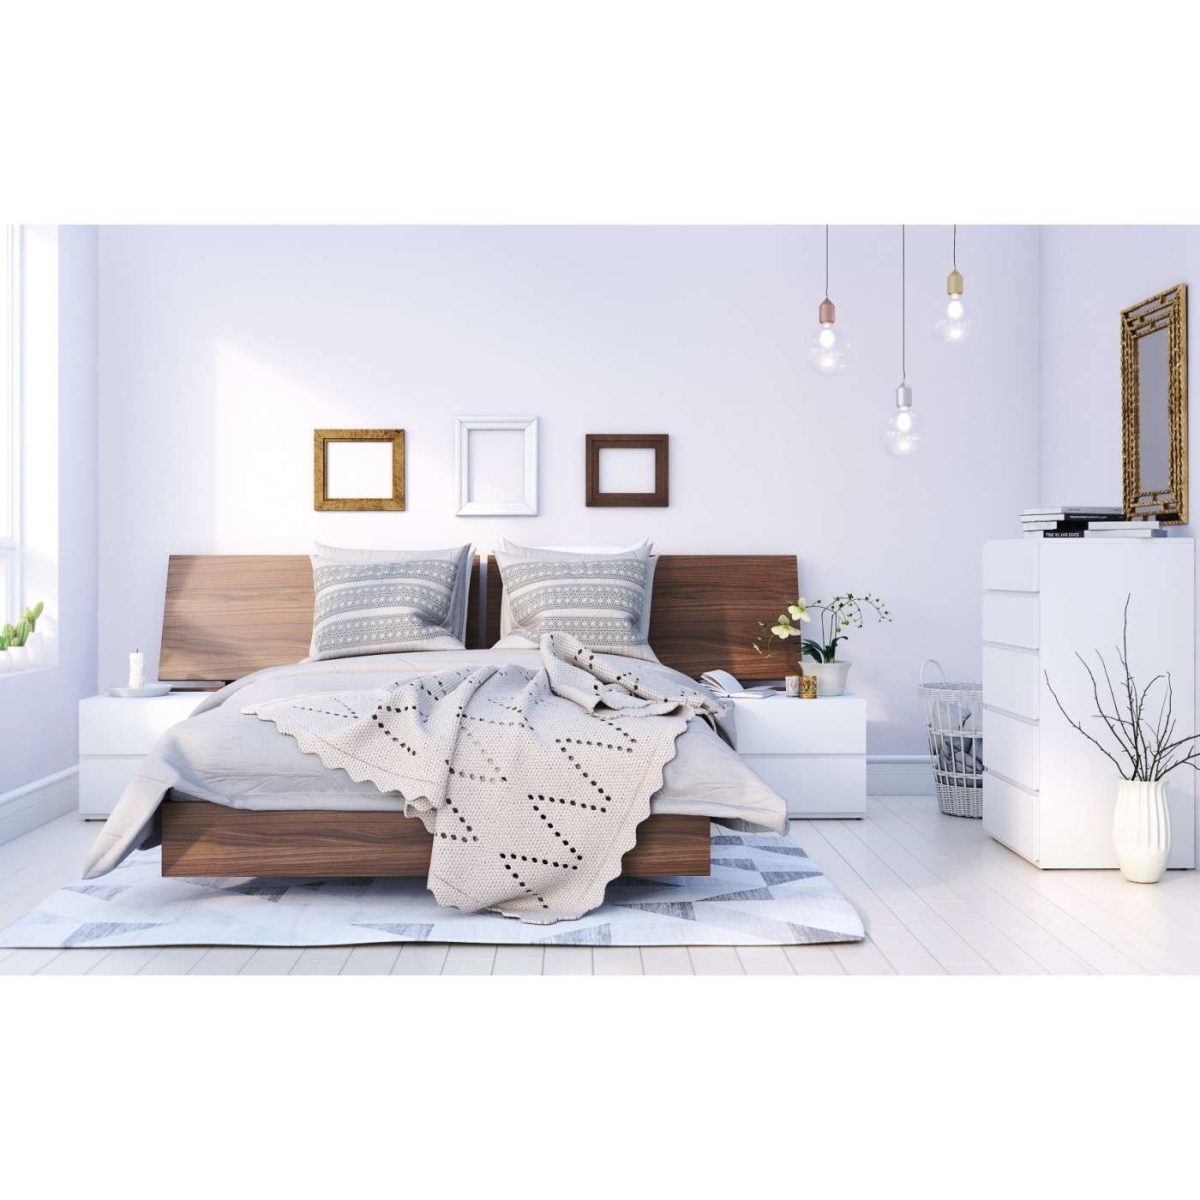 400870 Denali Bedroom Set, Walnut & White - Full Size